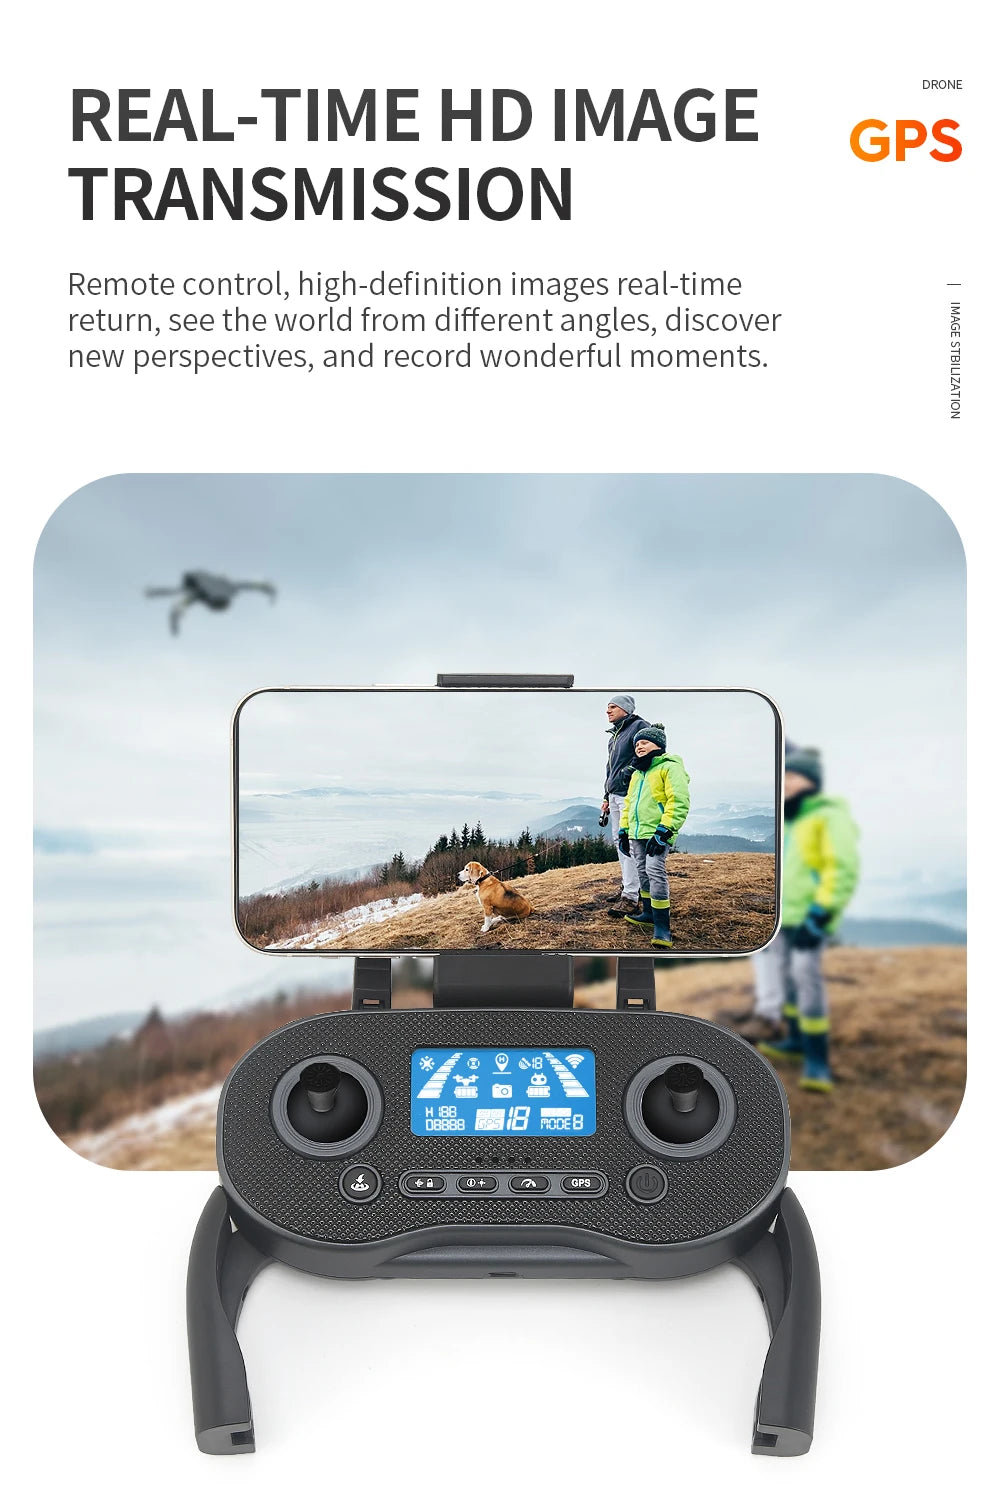 WYFA X3 Drone, DRONE REAL-TIME HD IMAGE GPS TRANSMISSION Remote control;